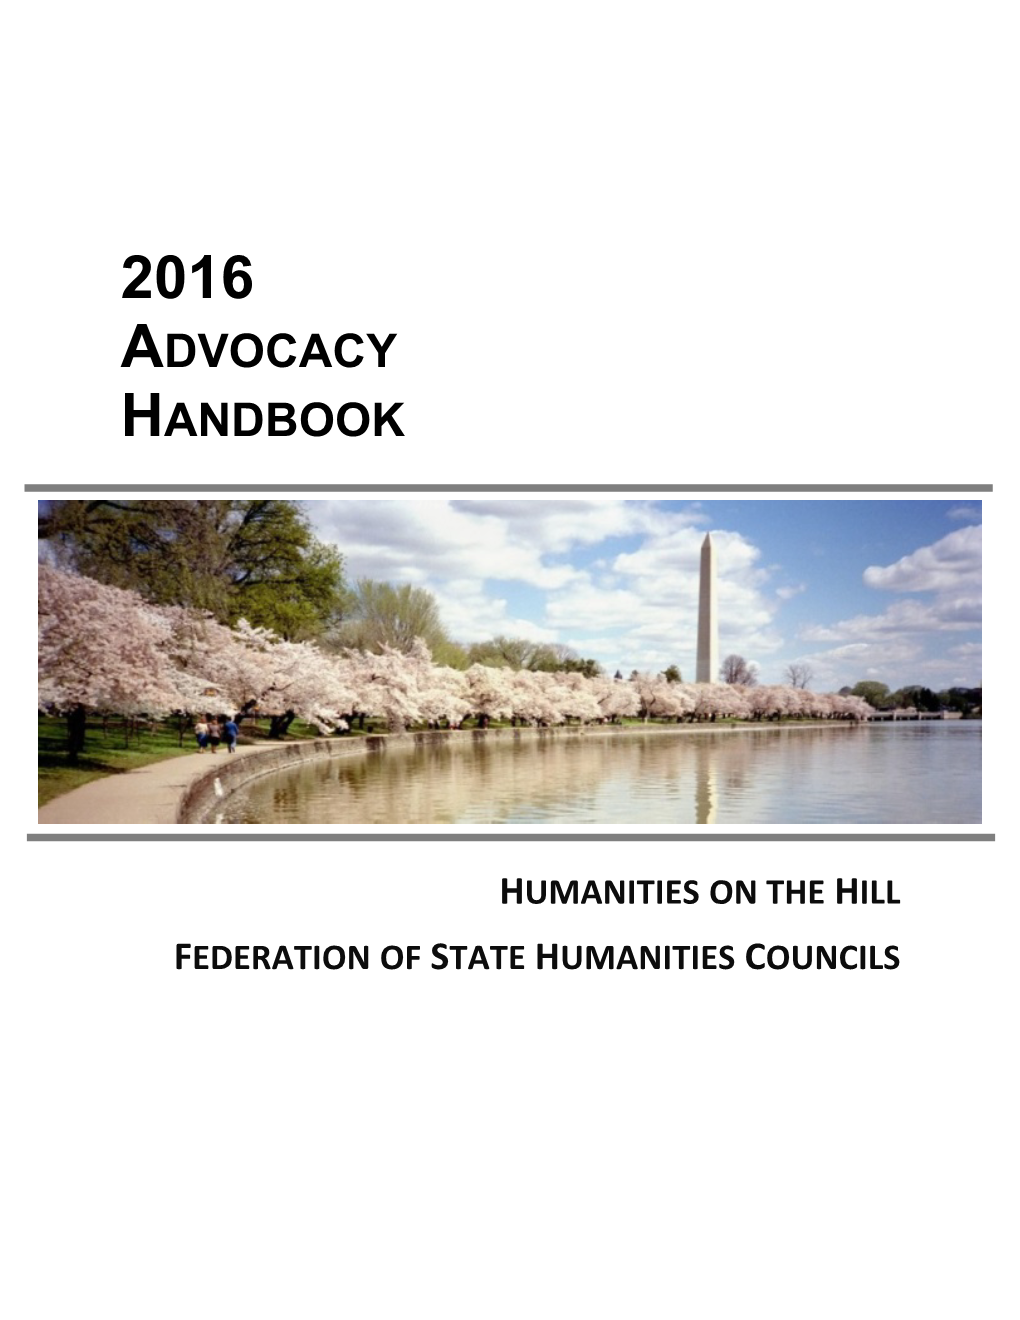 Advocacy Handbook